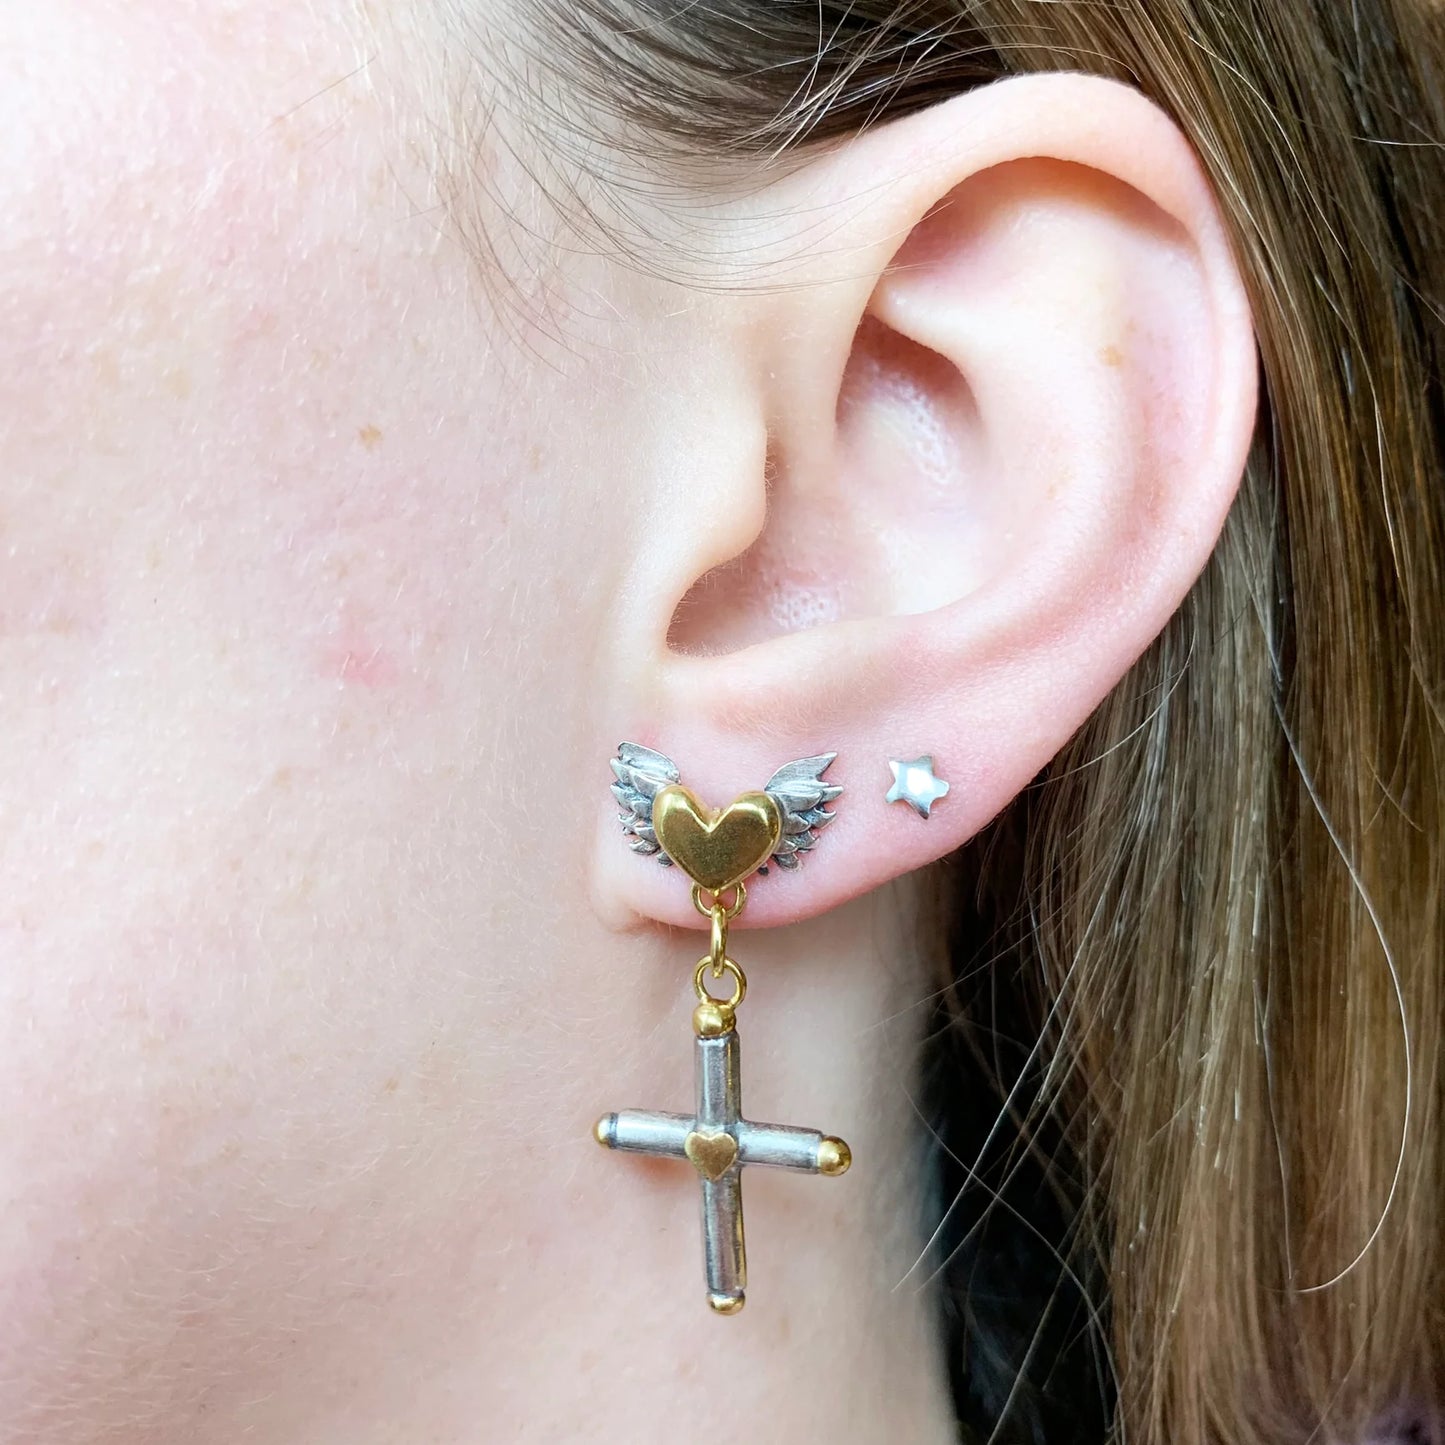 Liberty Cross Earrings